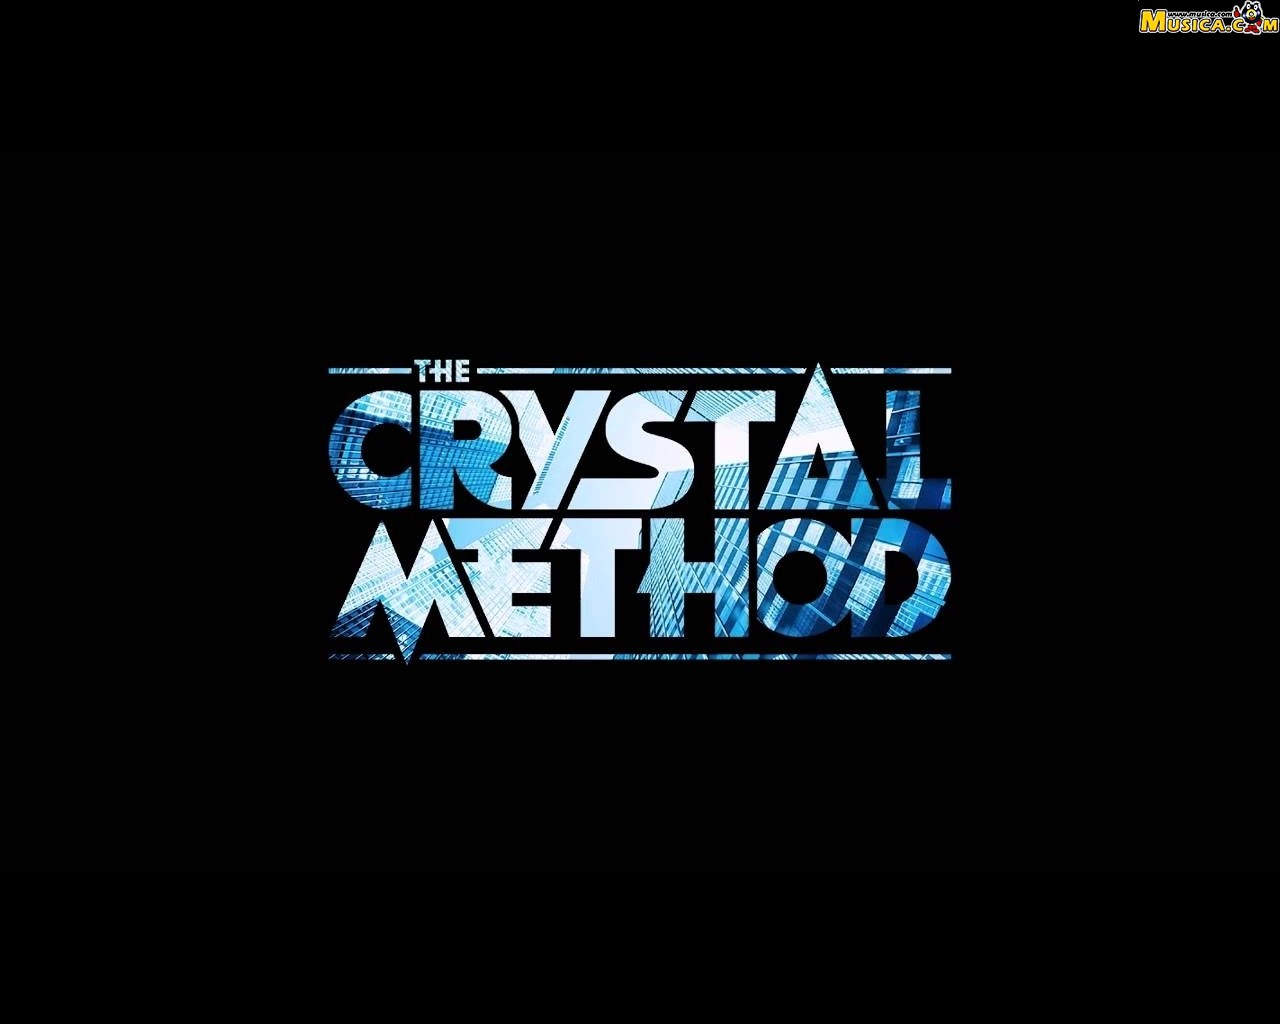 Fondo de pantalla de The Crystal Method